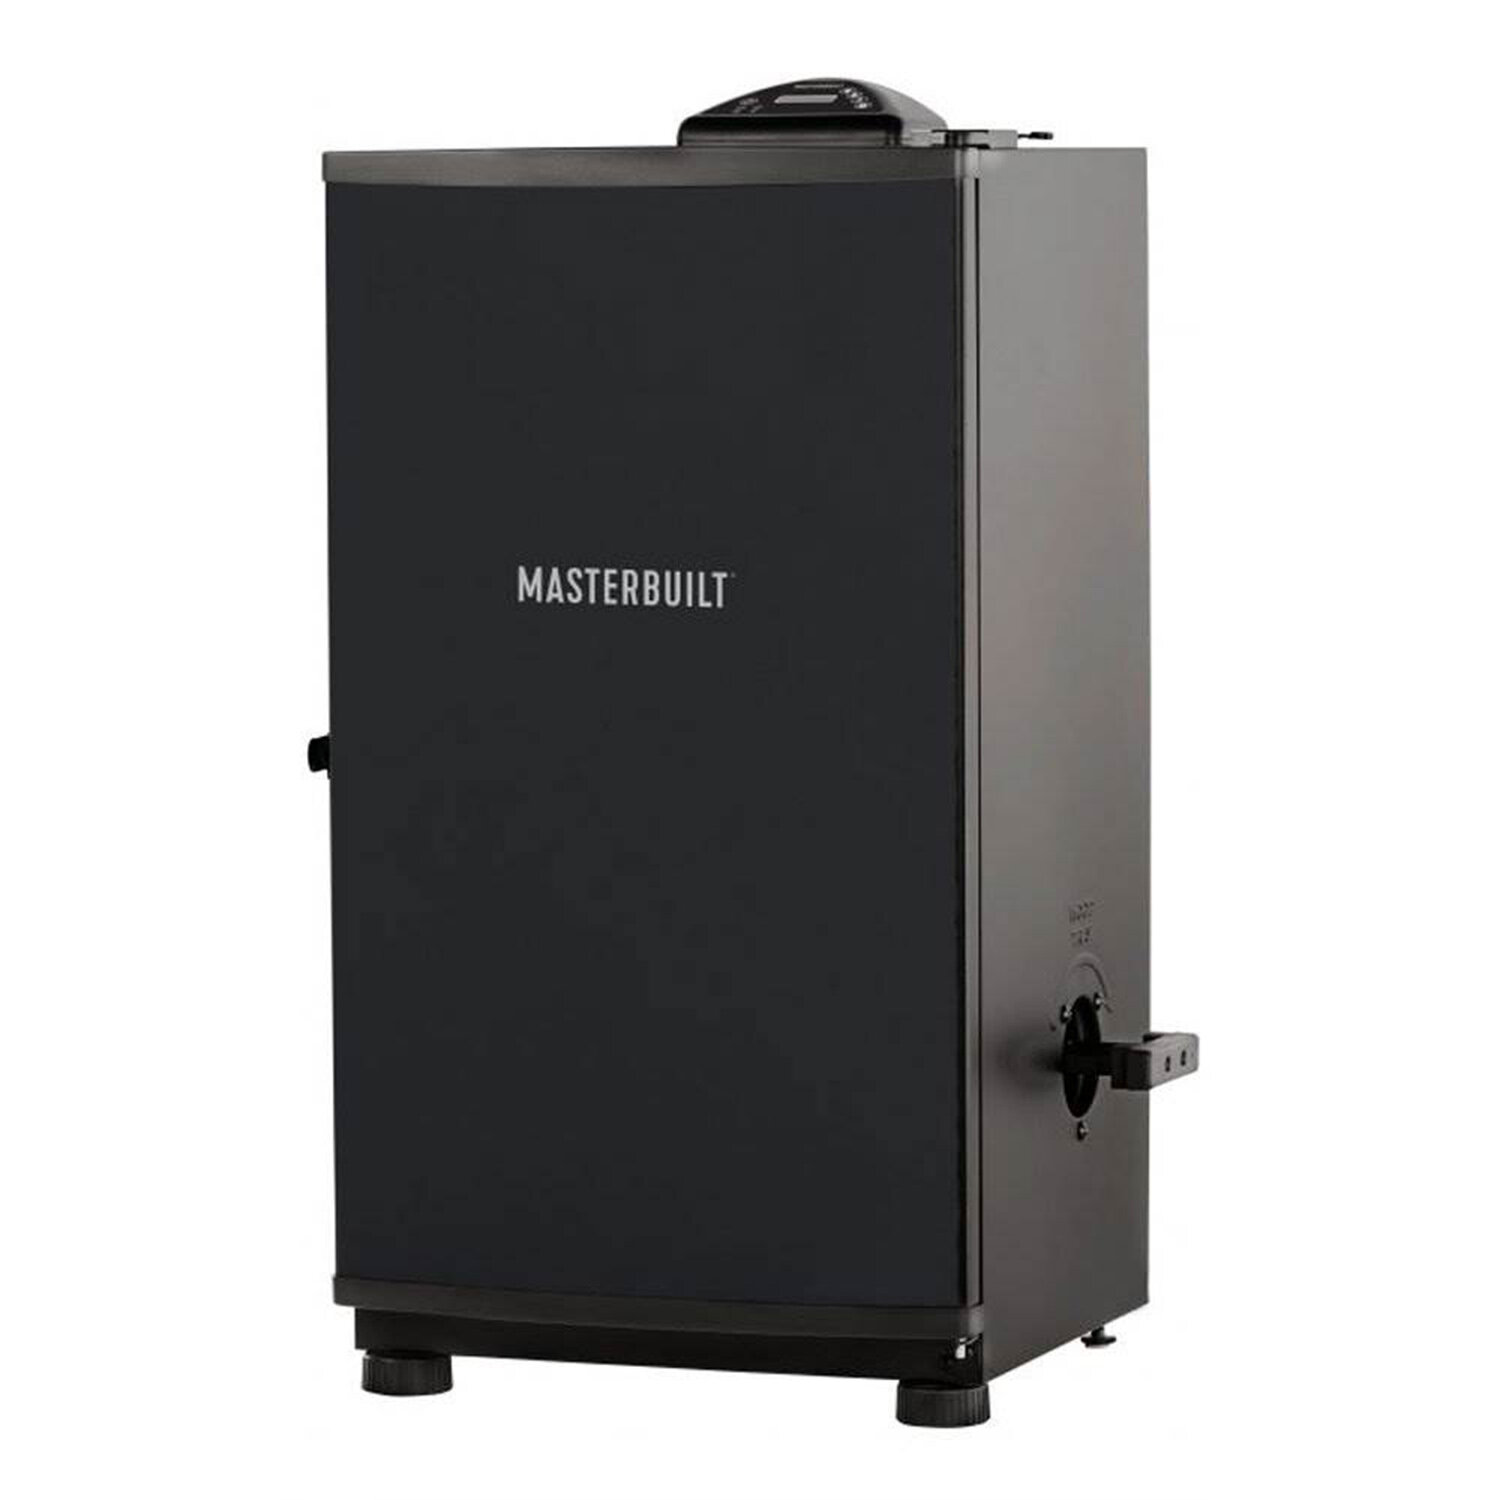 Masterbuilt 40 Bluetooth Electric Smoker Review - Smoked BBQ Source